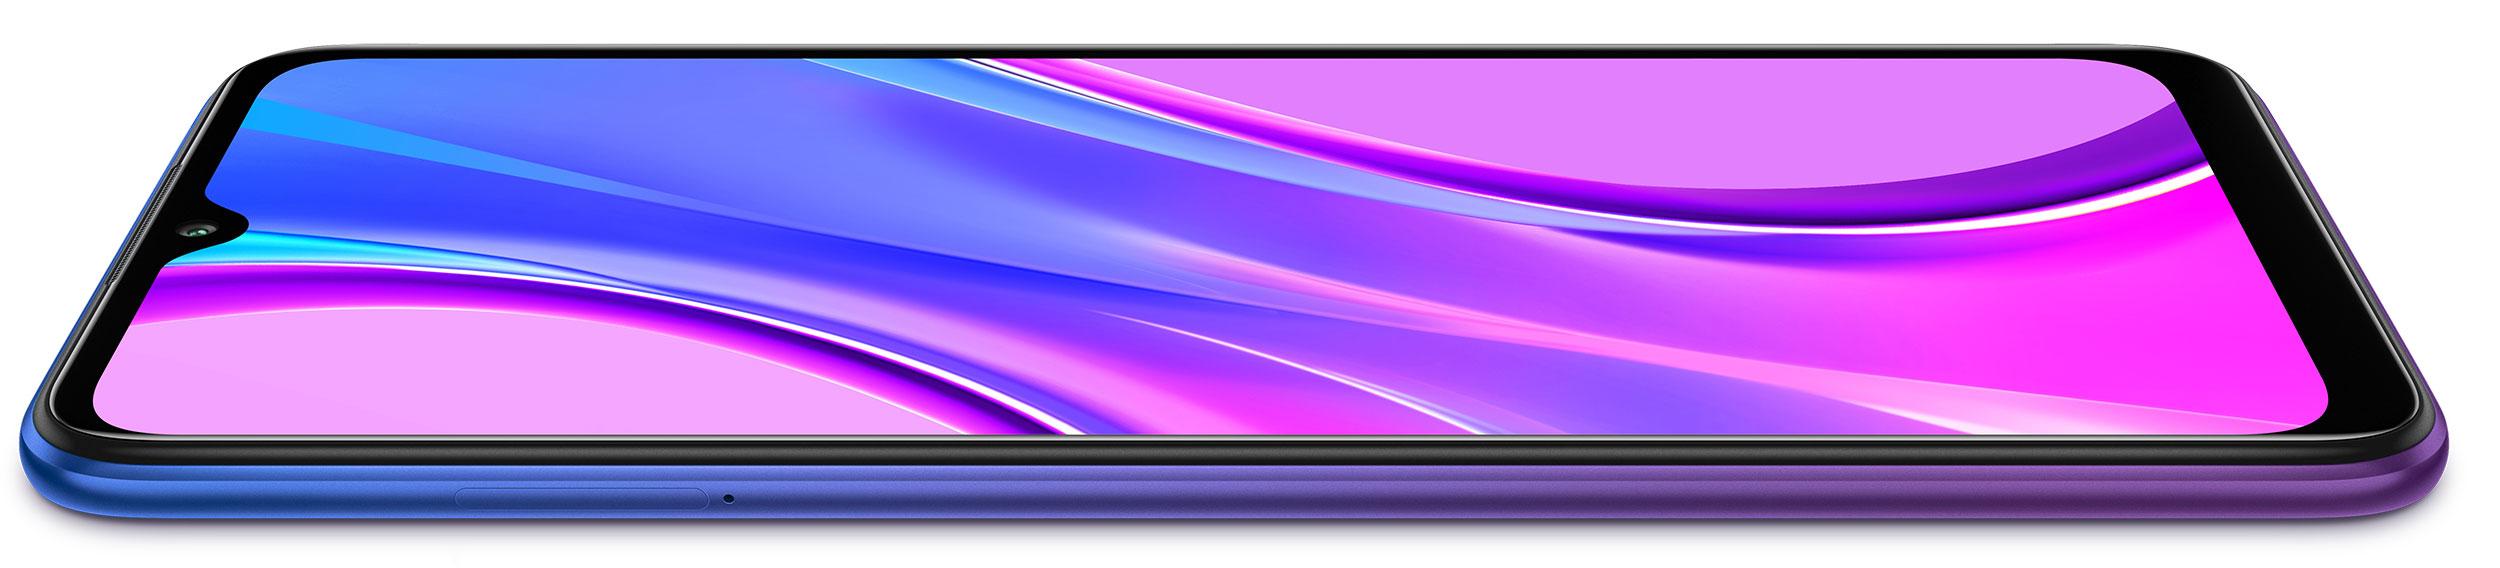 Xiaomi Redmi 9 3 32gb Purple